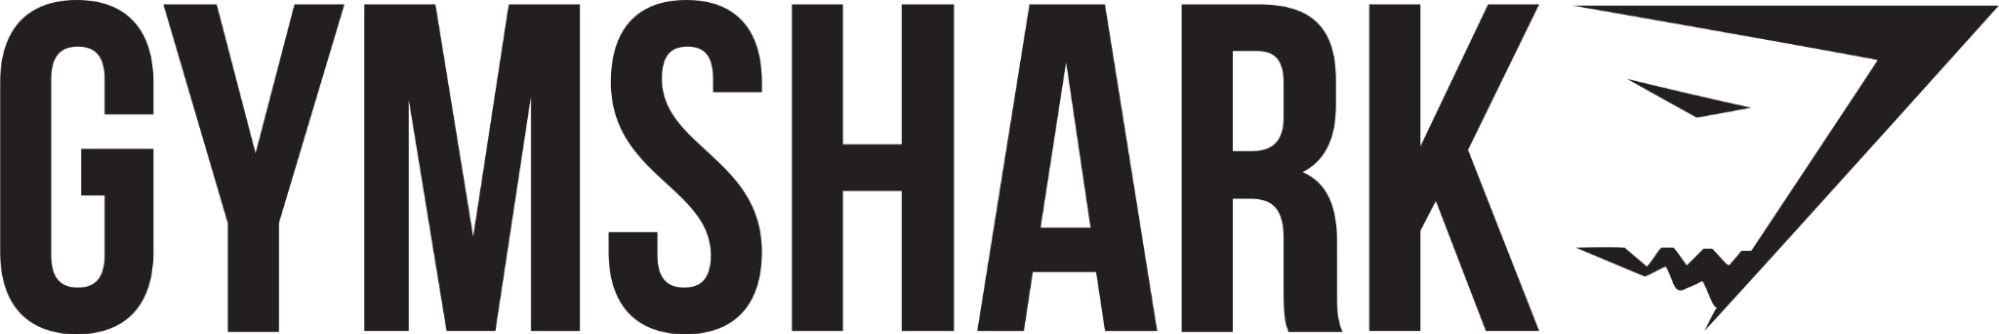 Image of Gymshark logo